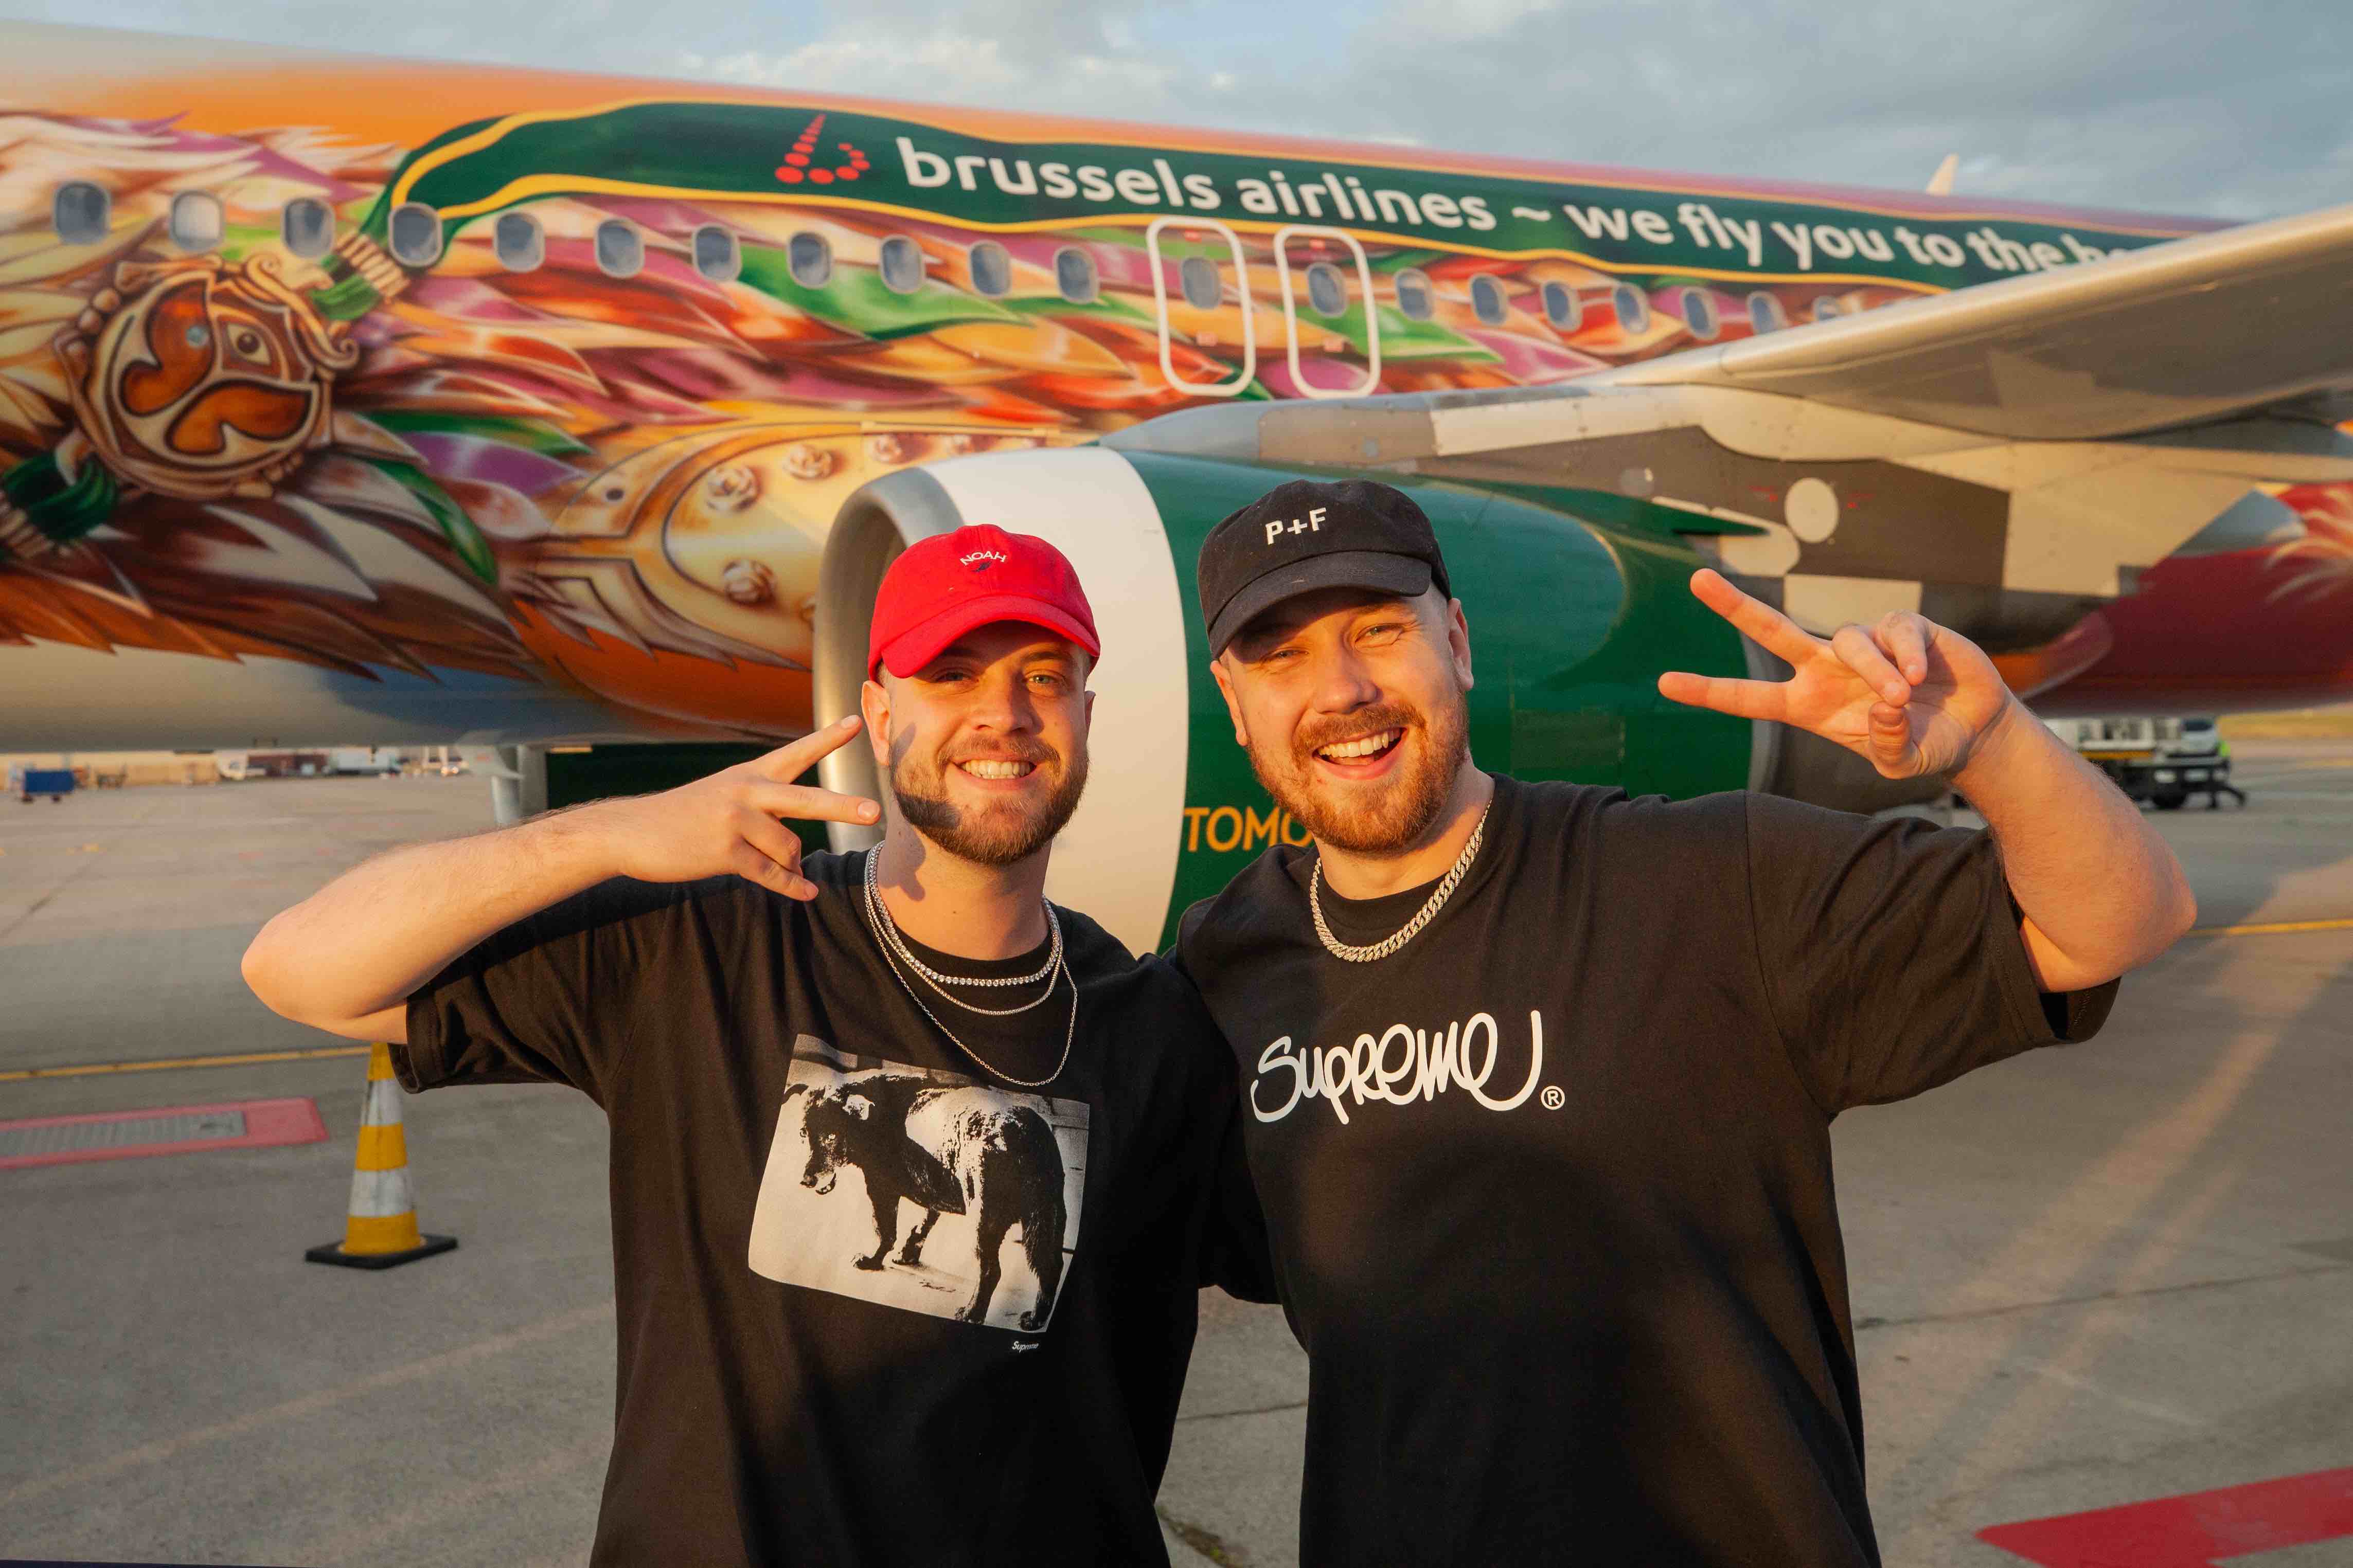 Brussels Airlines relie le monde à Tomorrowland